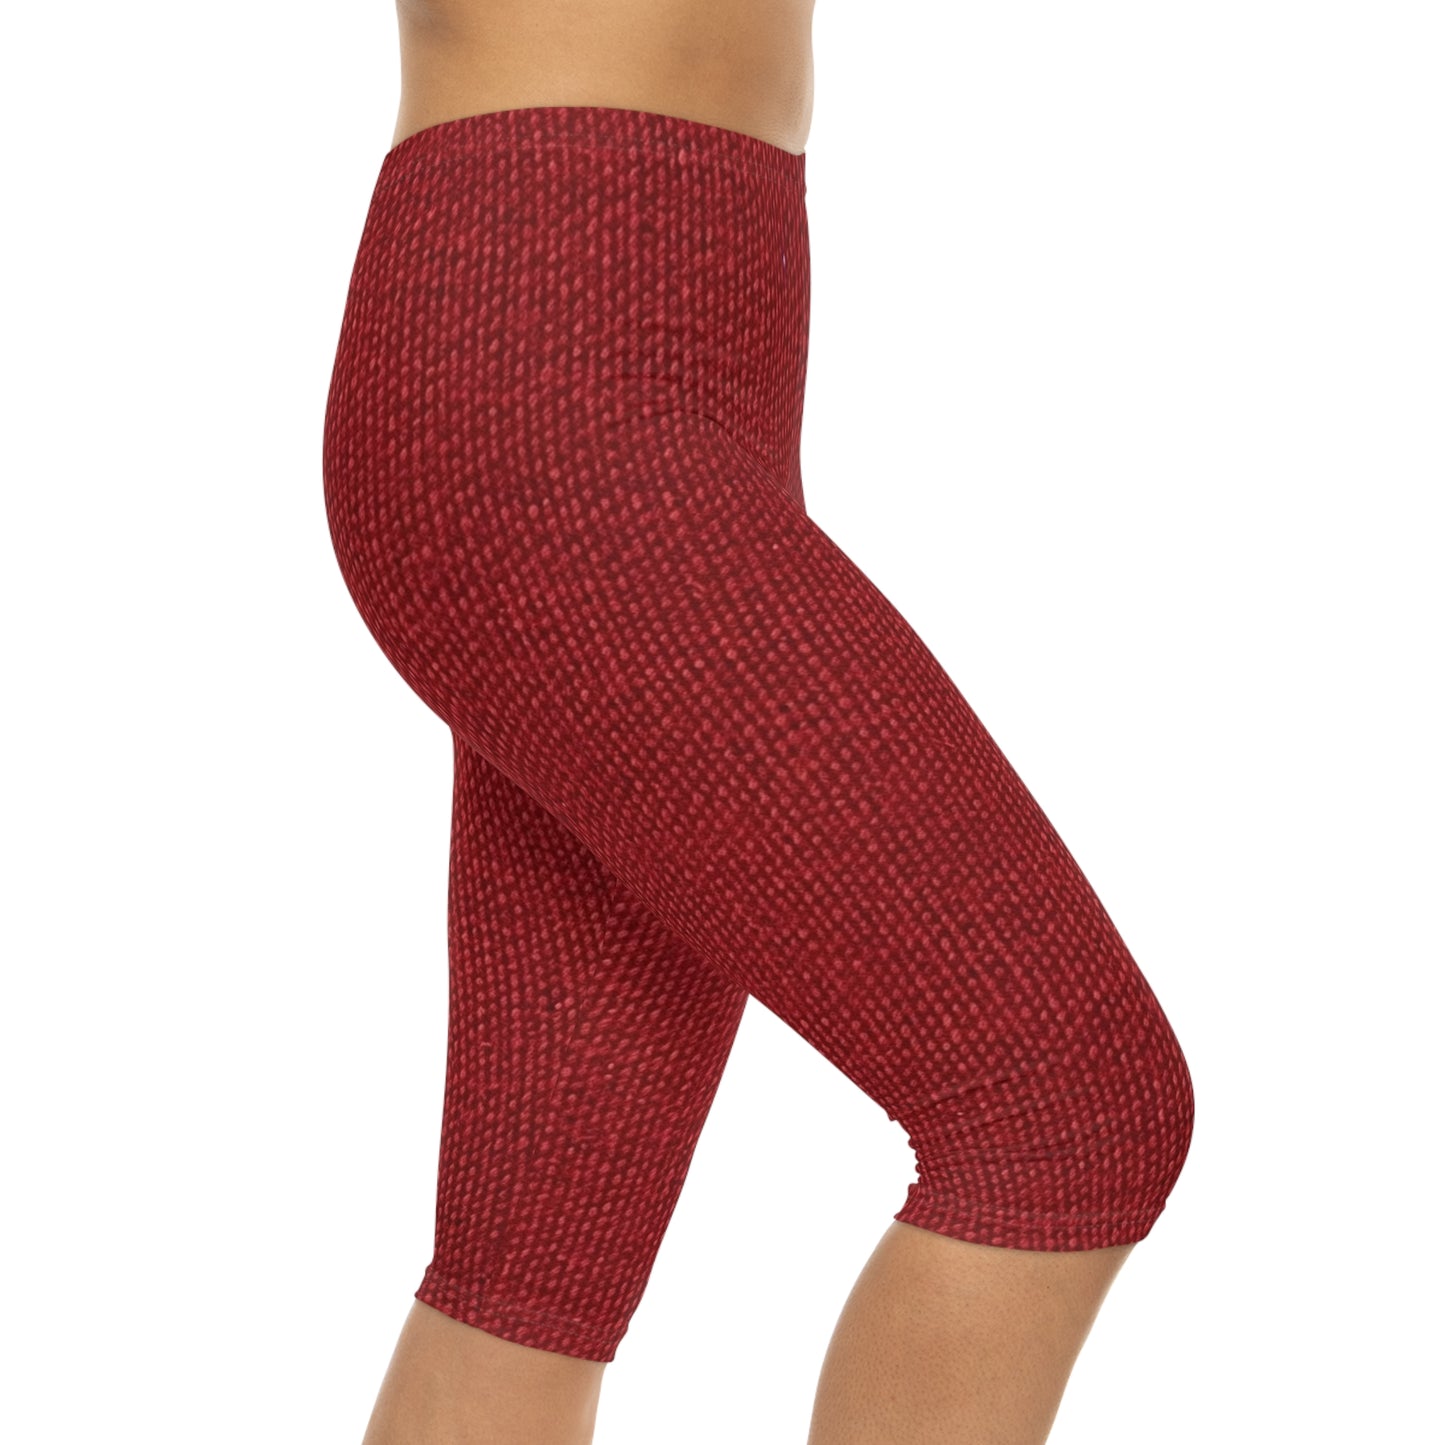 Bold Ruby Red: Denim-Inspired, Passionate Fabric Style - Women’s Capri Leggings (AOP)